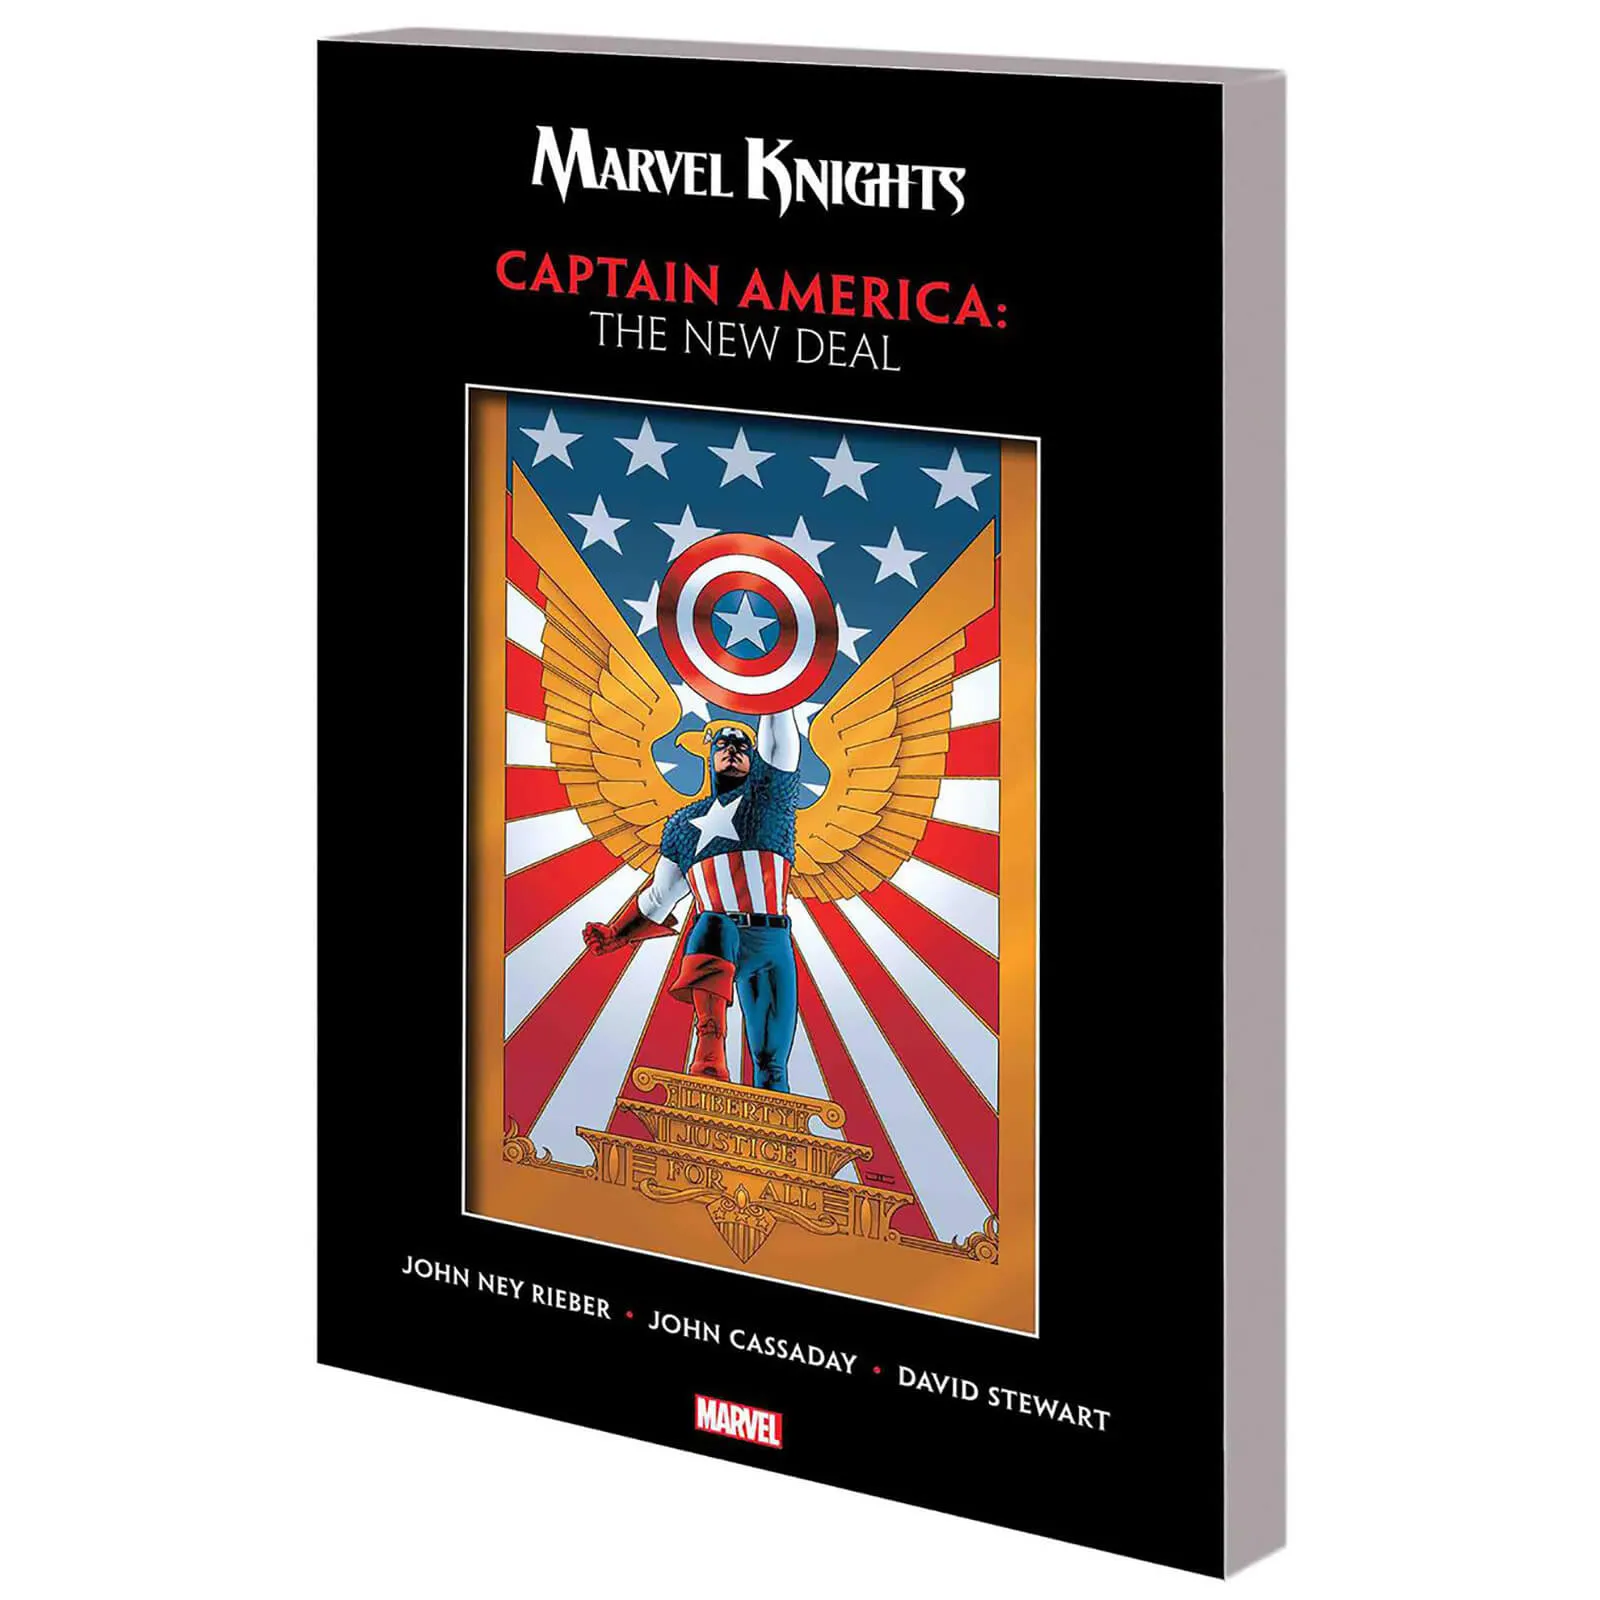  Marvel Knights Captain America Rieber Cassaday Trade Paperback New Deal Graphic Novel